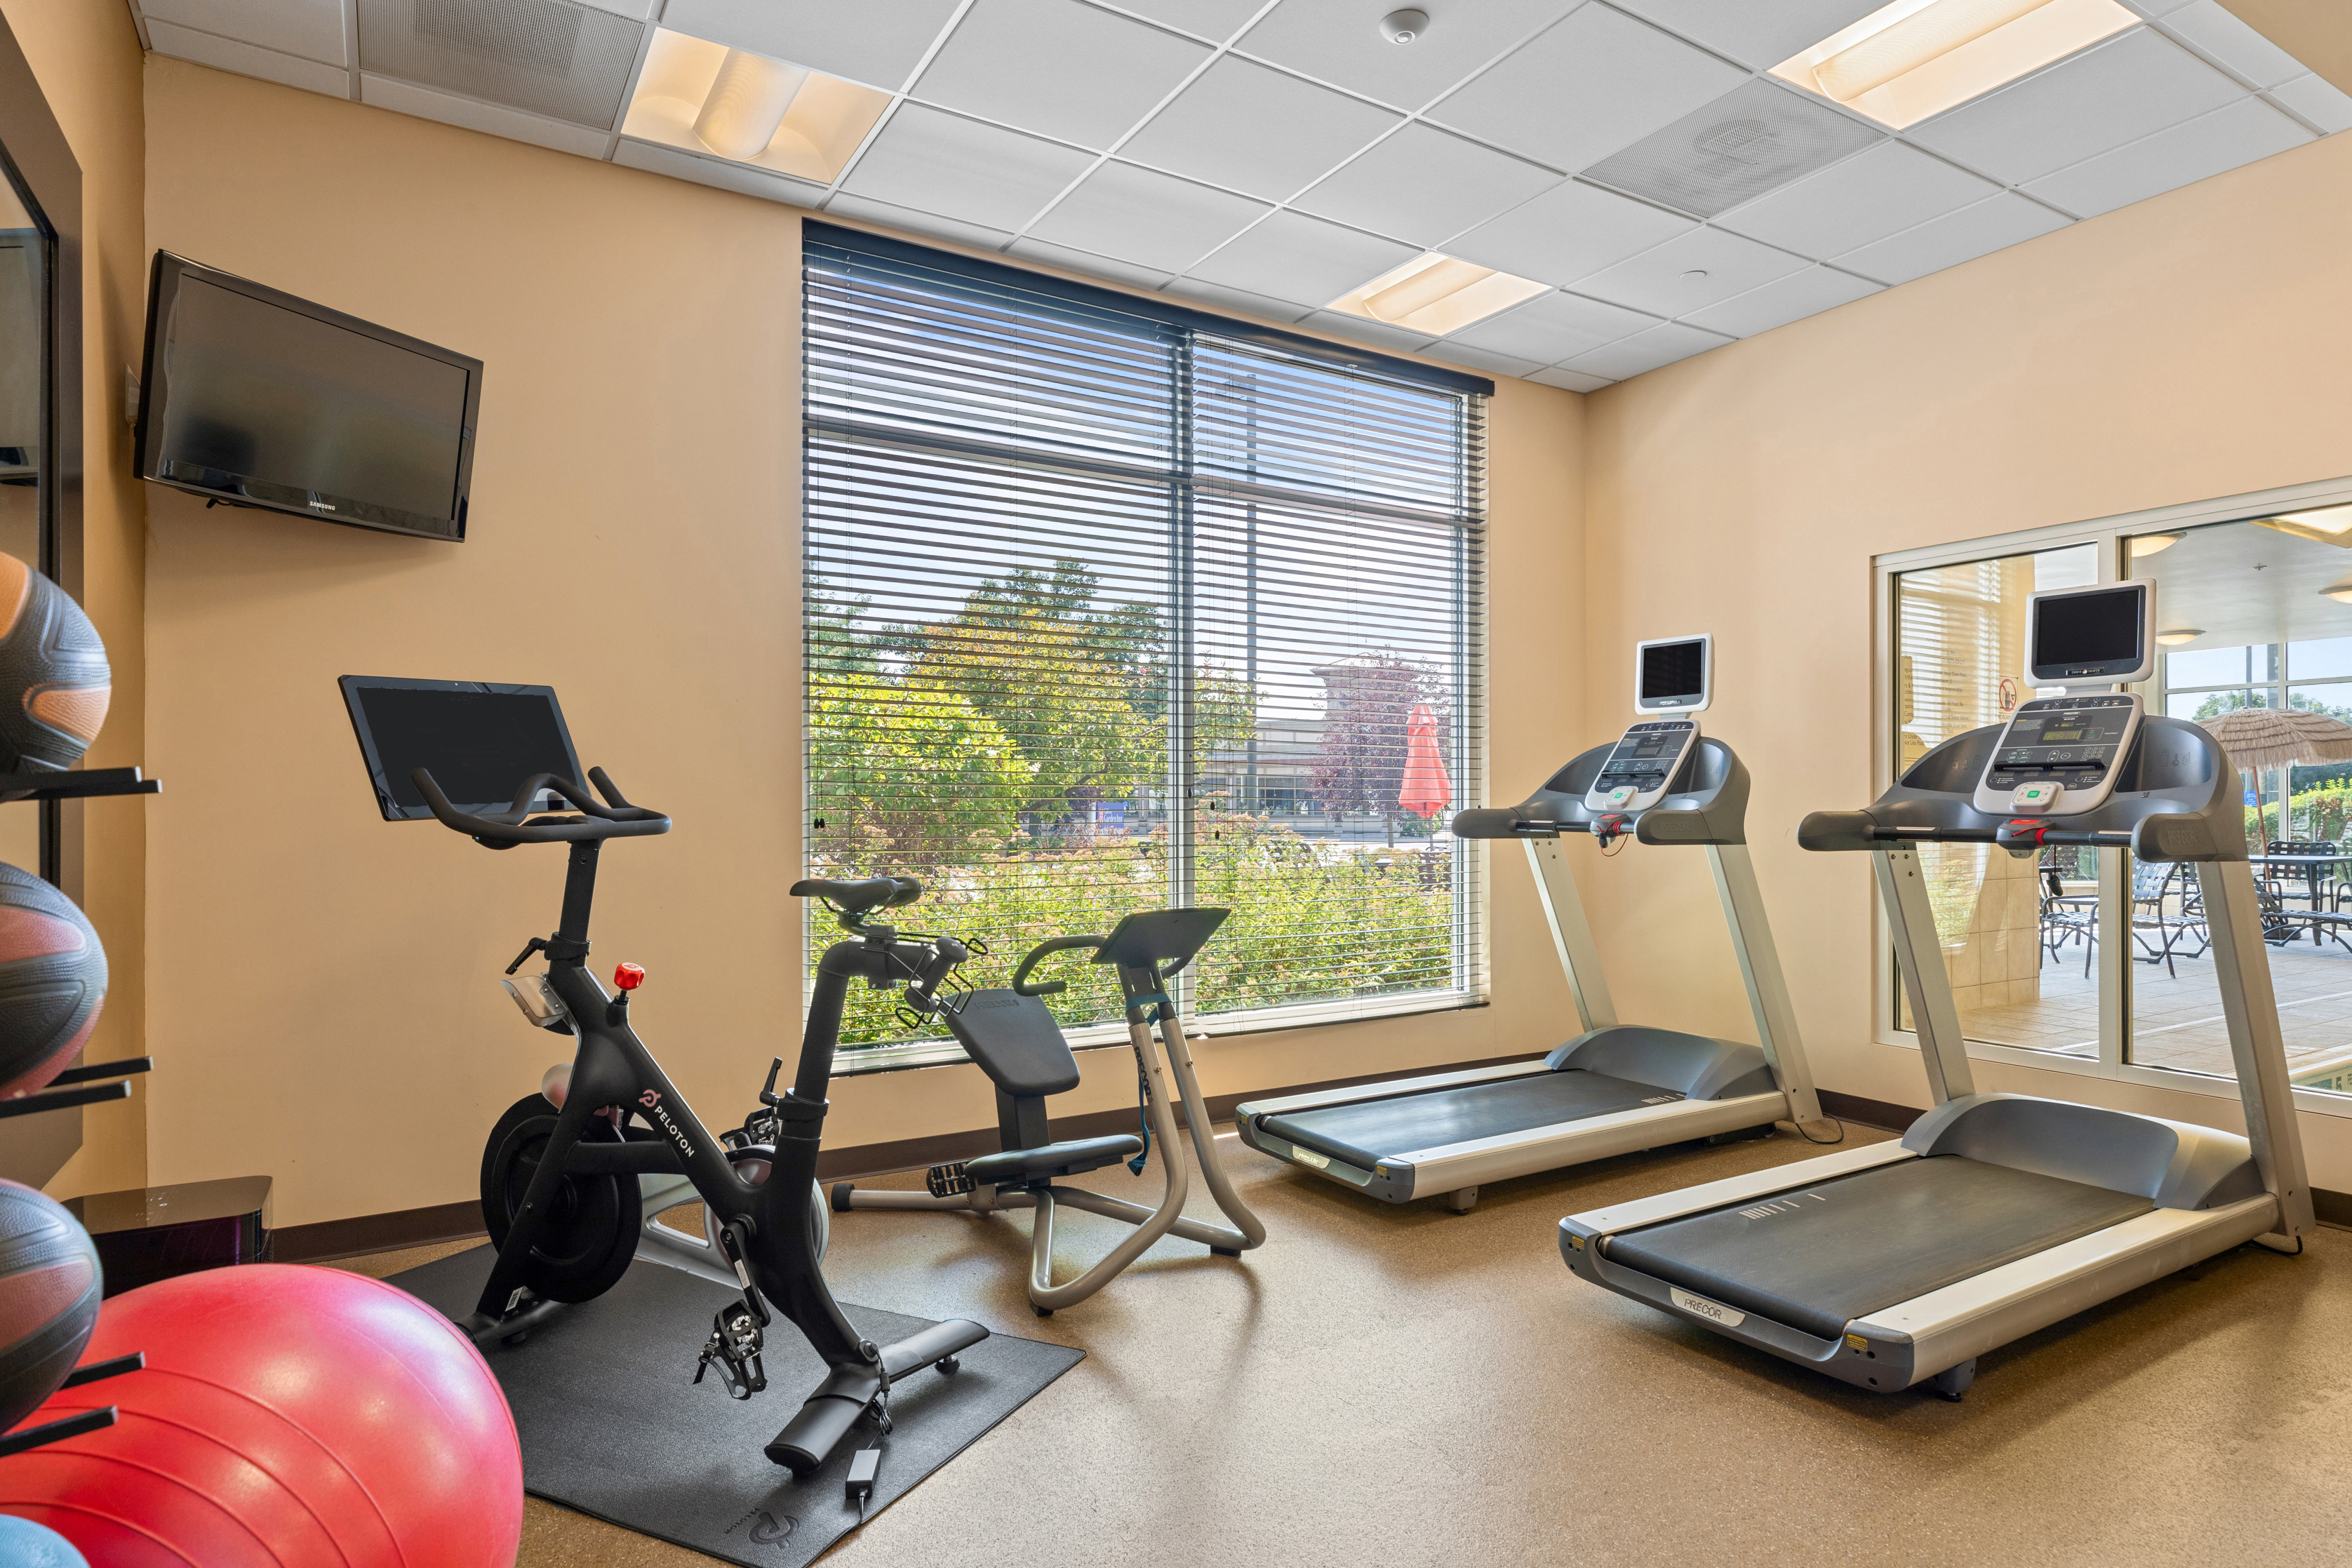 on site fitness center, peloton bike, treadmills, yoga ball